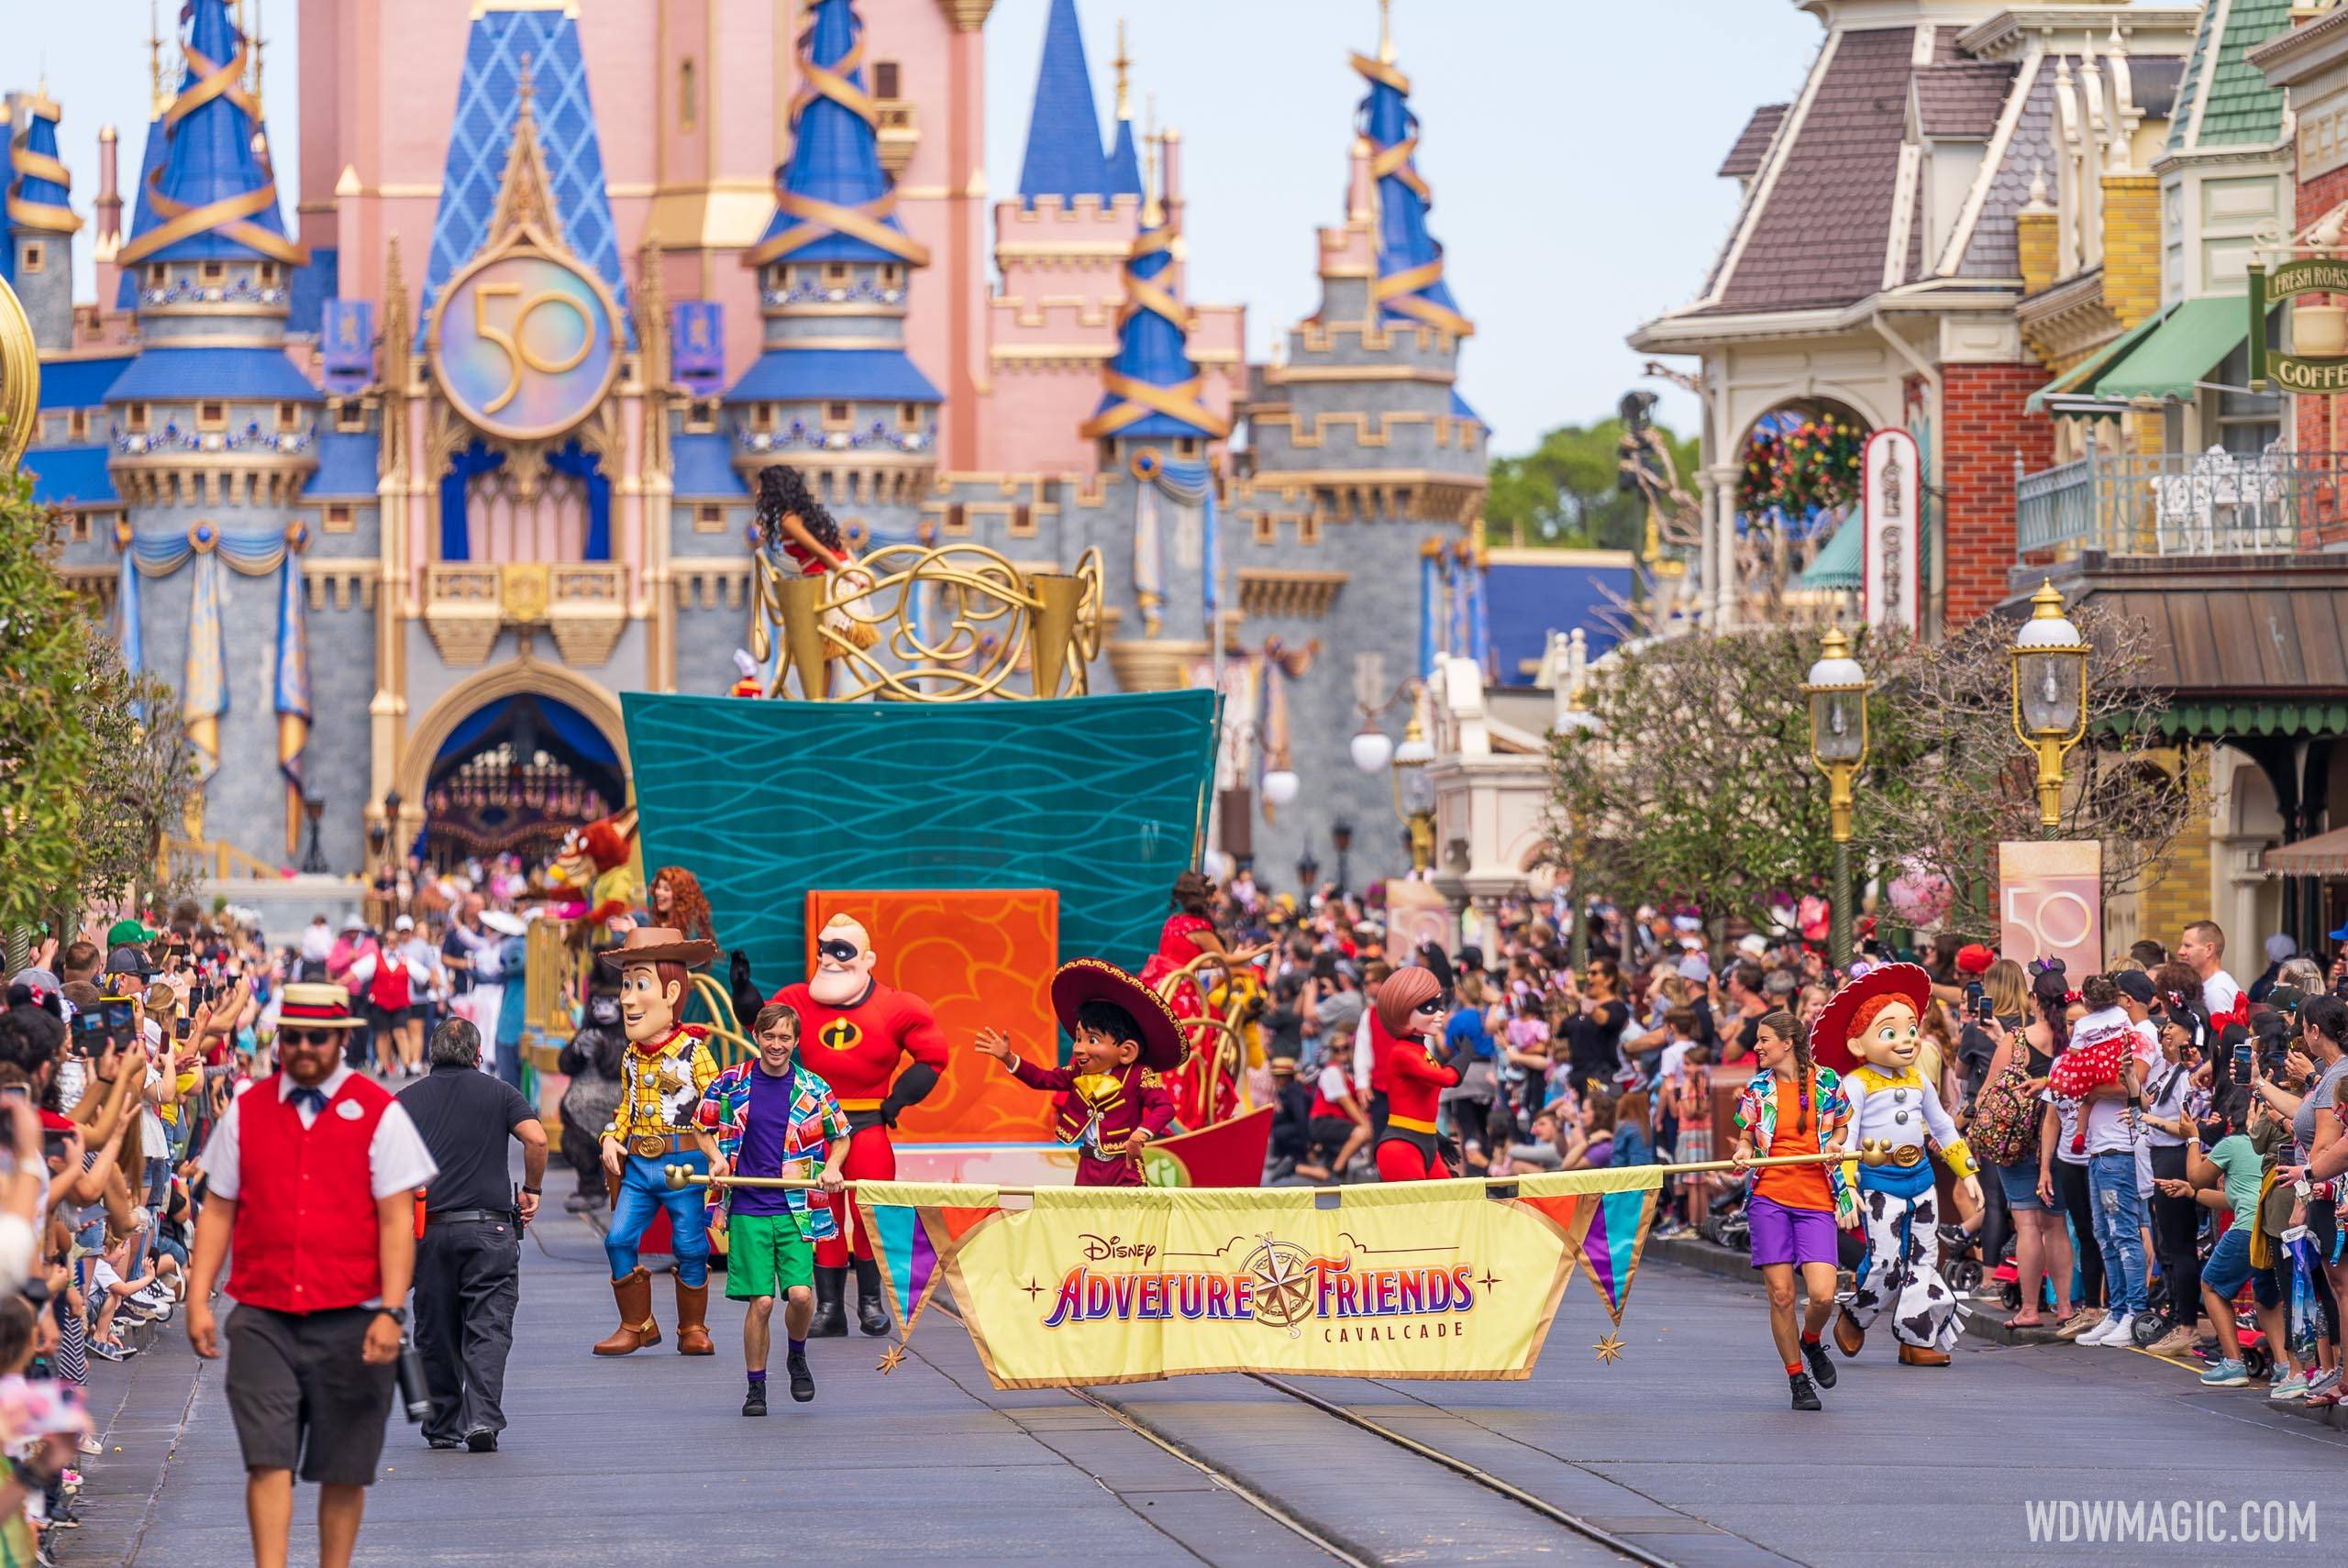 Disney Adventure Friends Cavalcade made its Magic Kingdom debut in February 2022